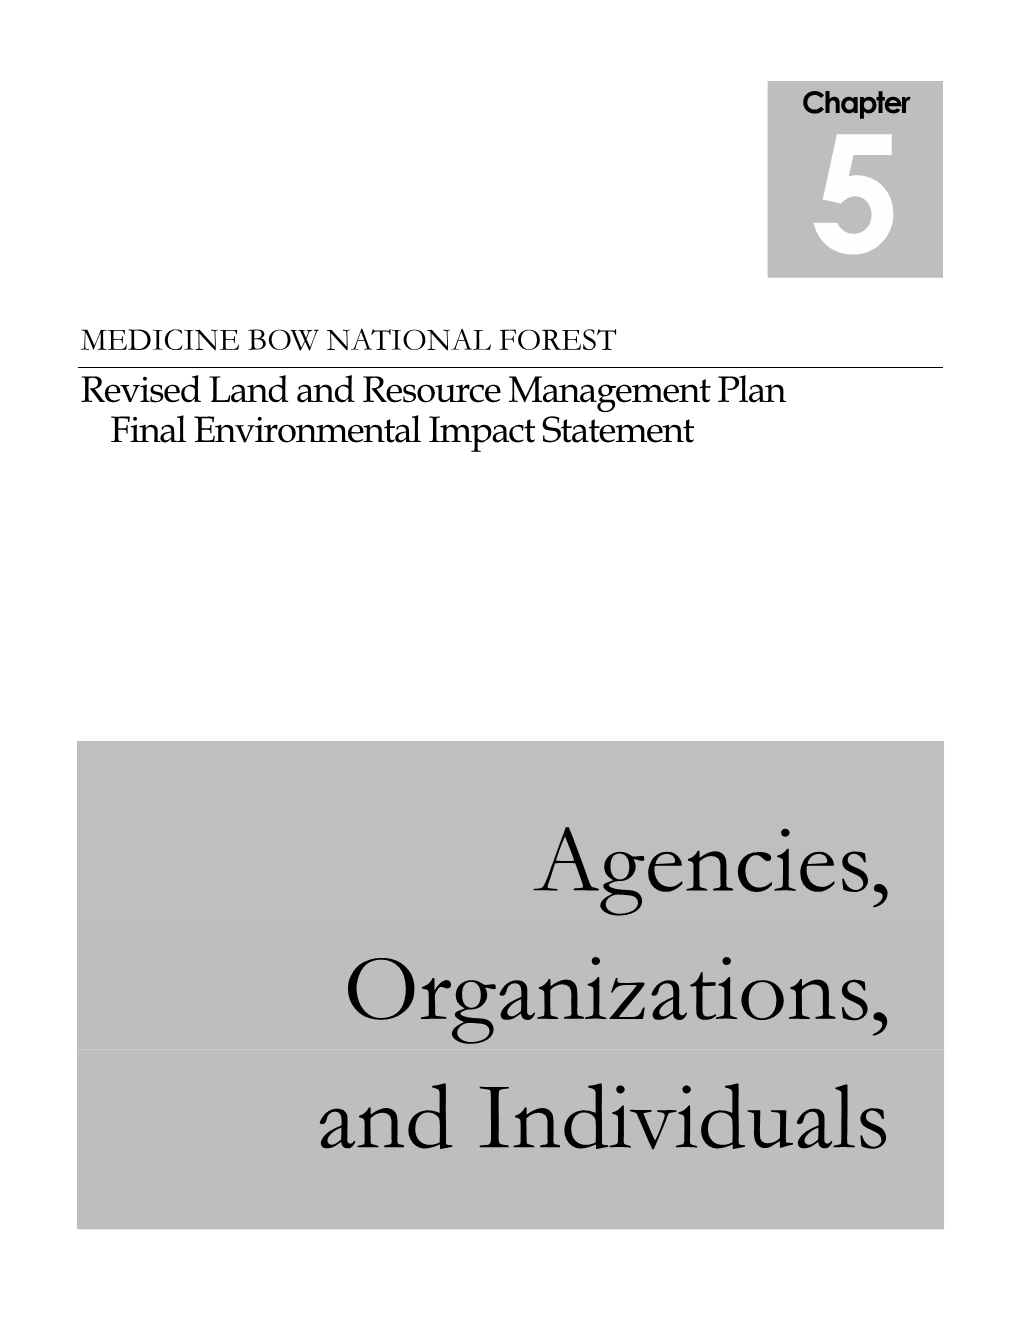 Chapter #5 Agencies, Organizations, and Individuals